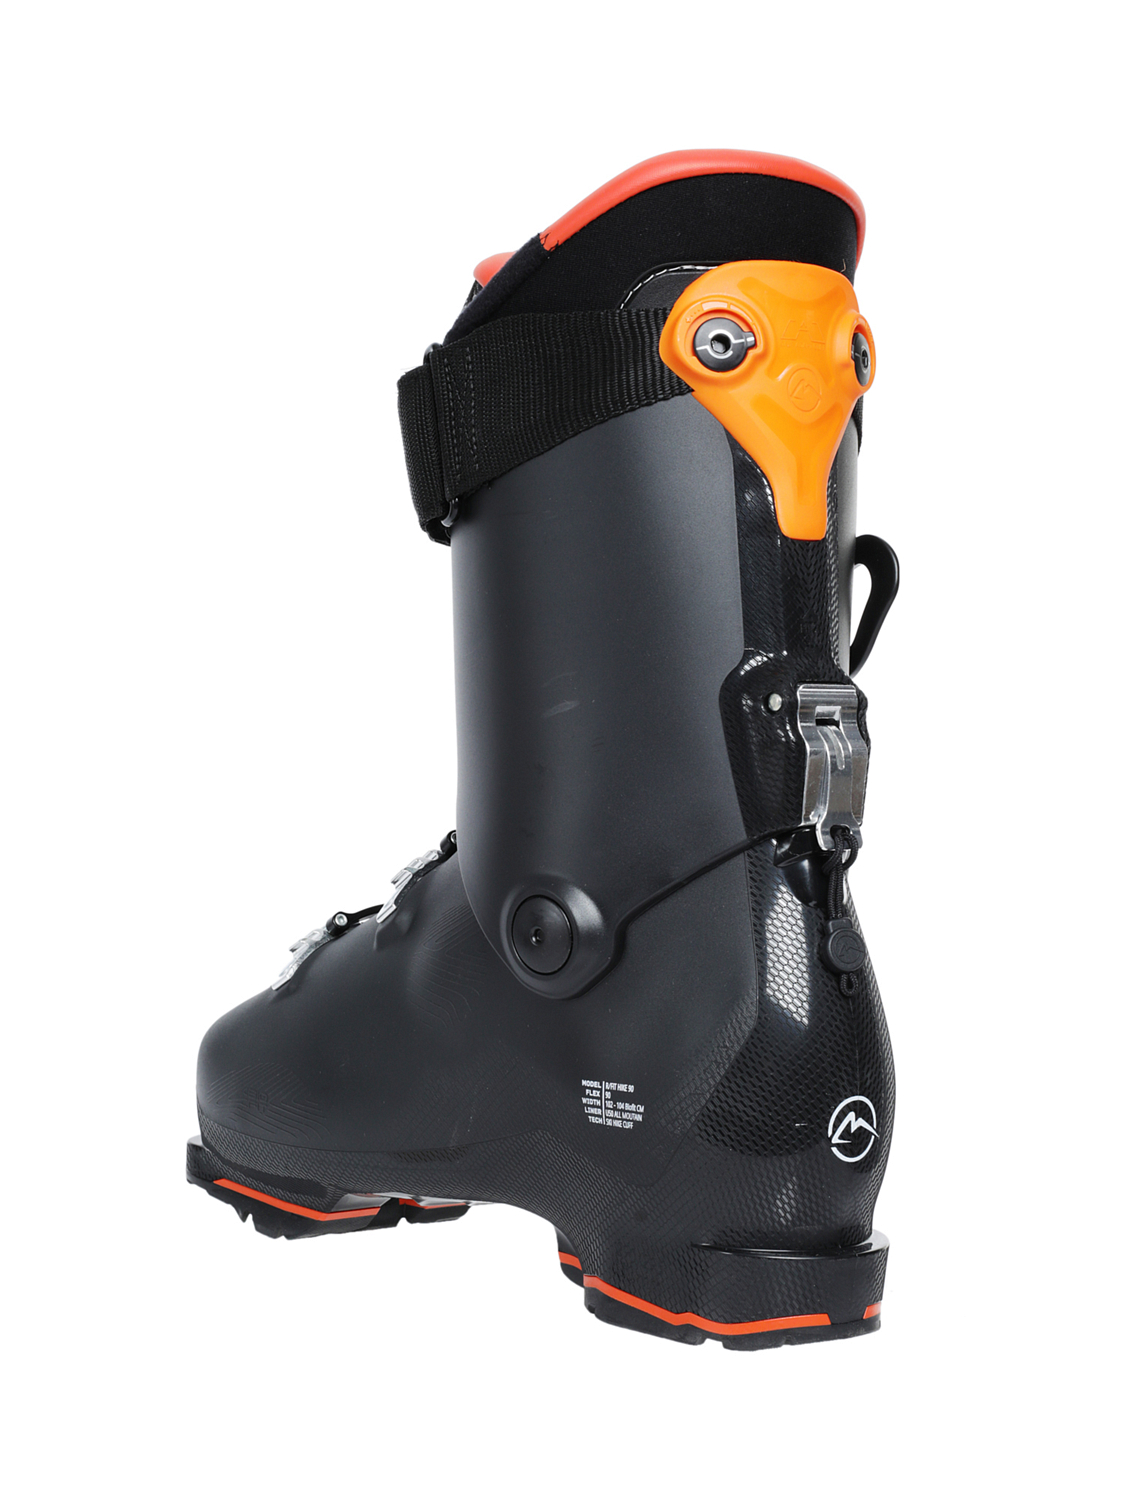 Горнолыжные ботинки ROXA Rfit Hike 90 GW Black/Orange